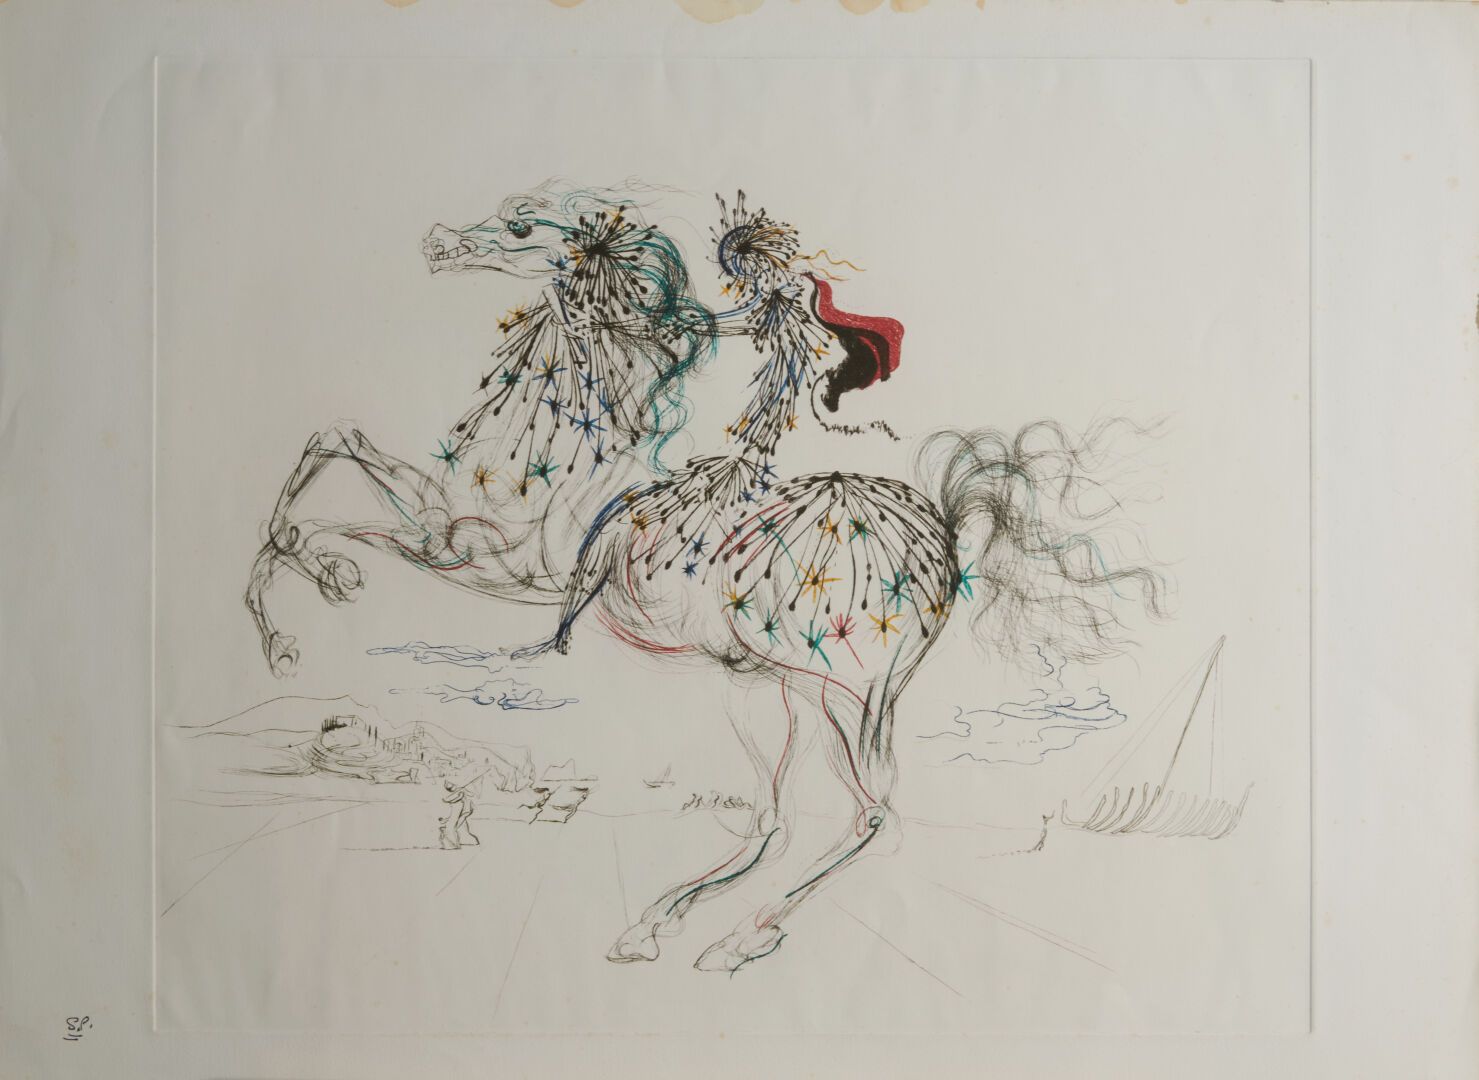 Null DALI 萨尔瓦多 (1904-1989)

"骑手 "印刷品 - 49x59